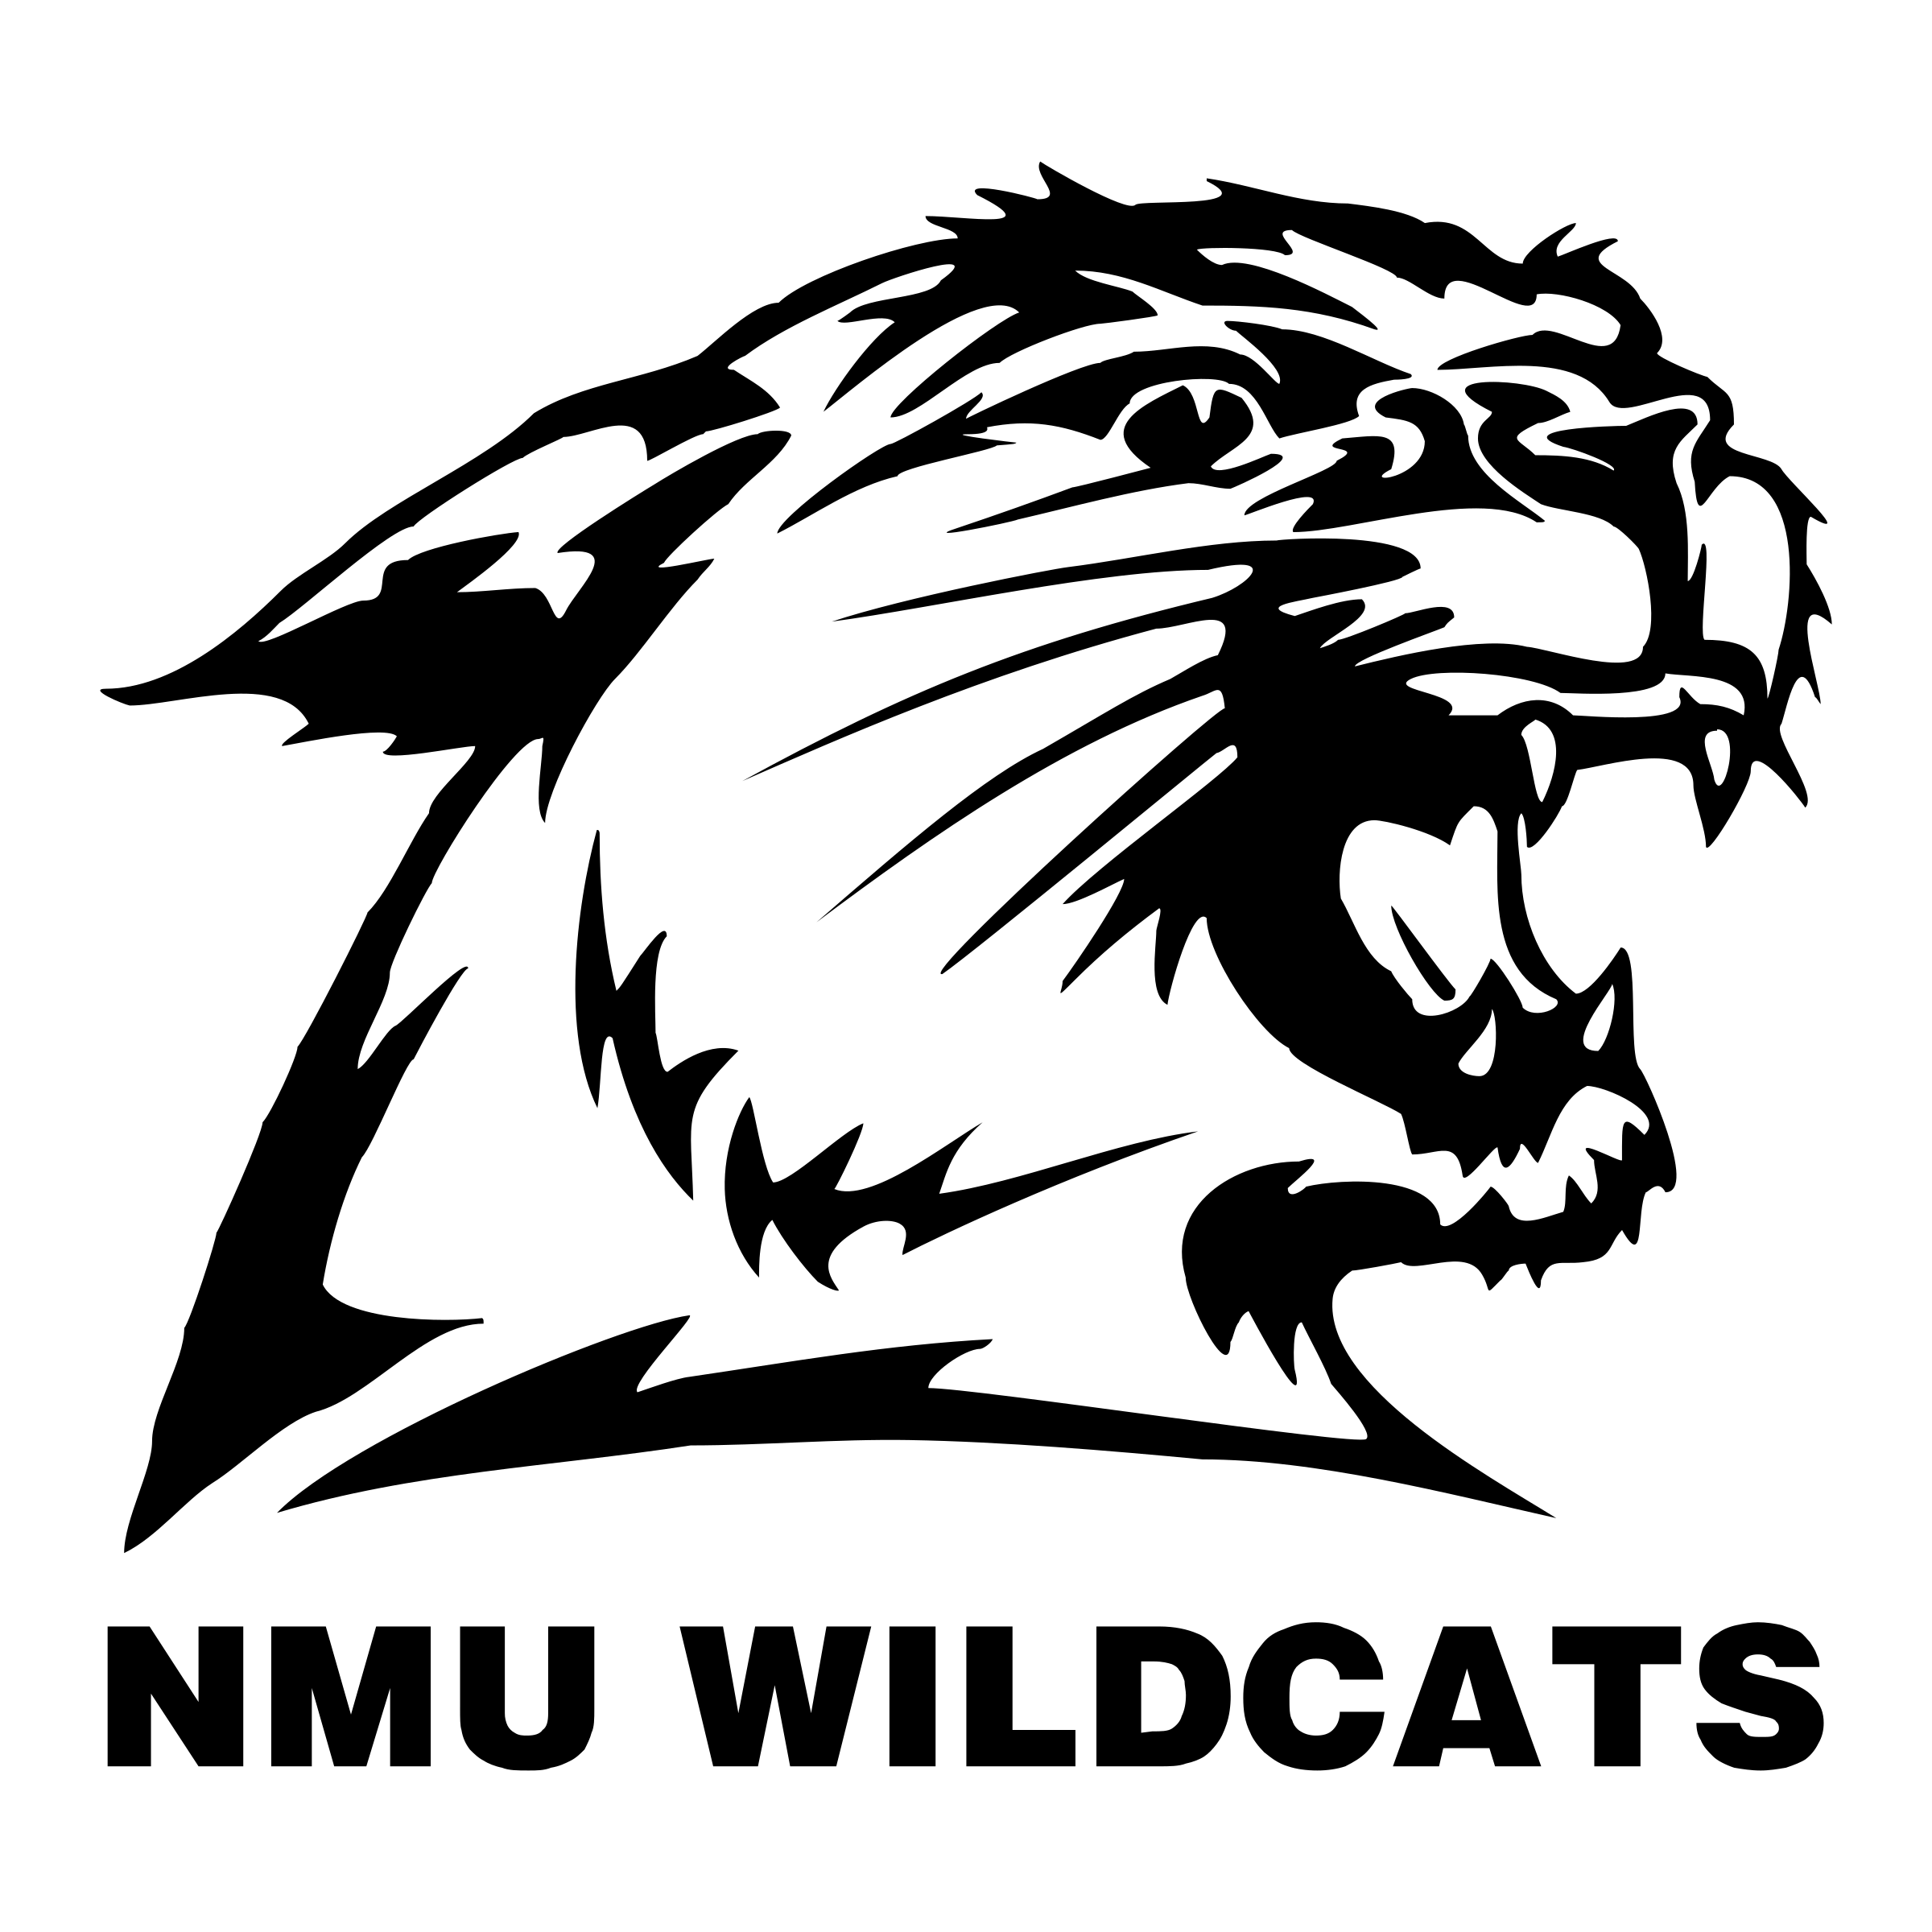 NMU Logo - NMU Wildcats Logo PNG Transparent & SVG Vector - Freebie Supply